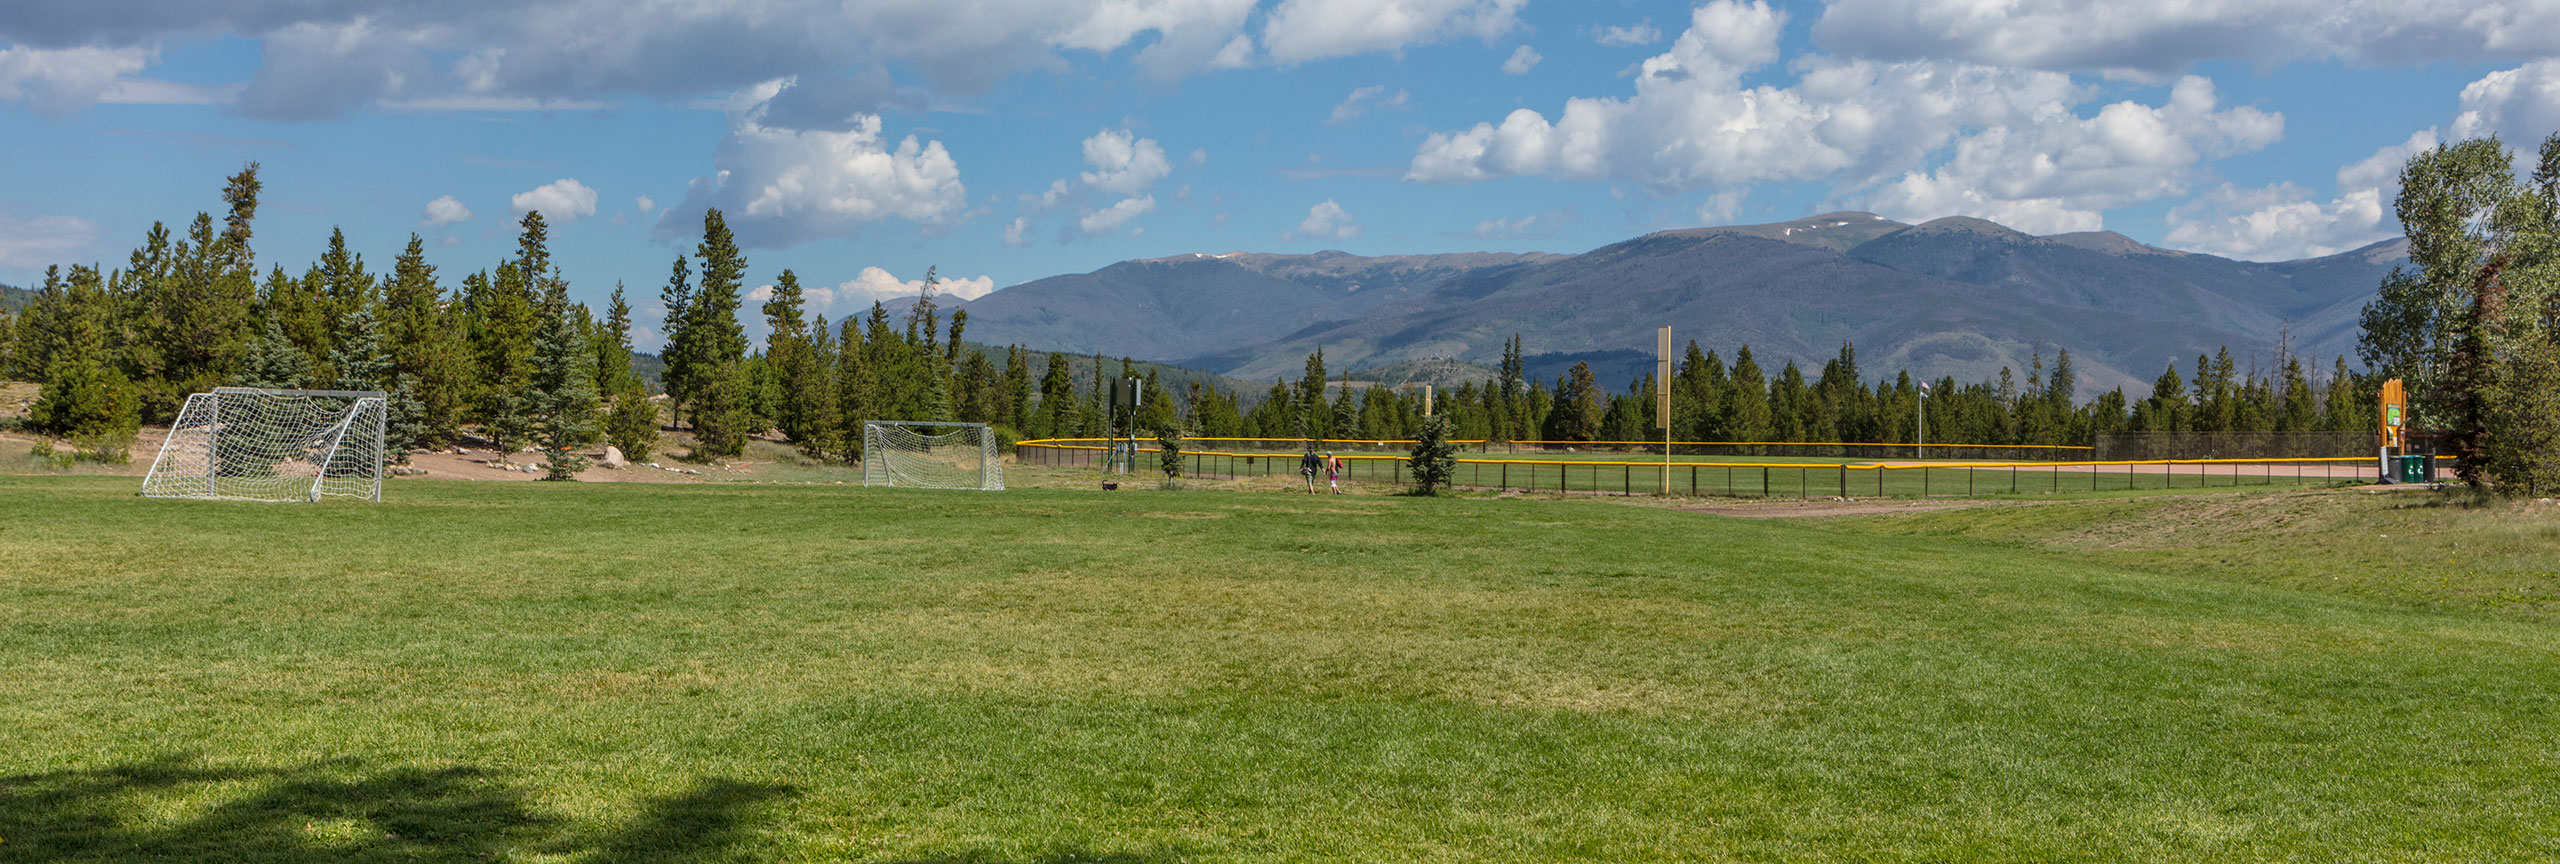 Multi-purpose field and ball field at Frisco Peninsula.